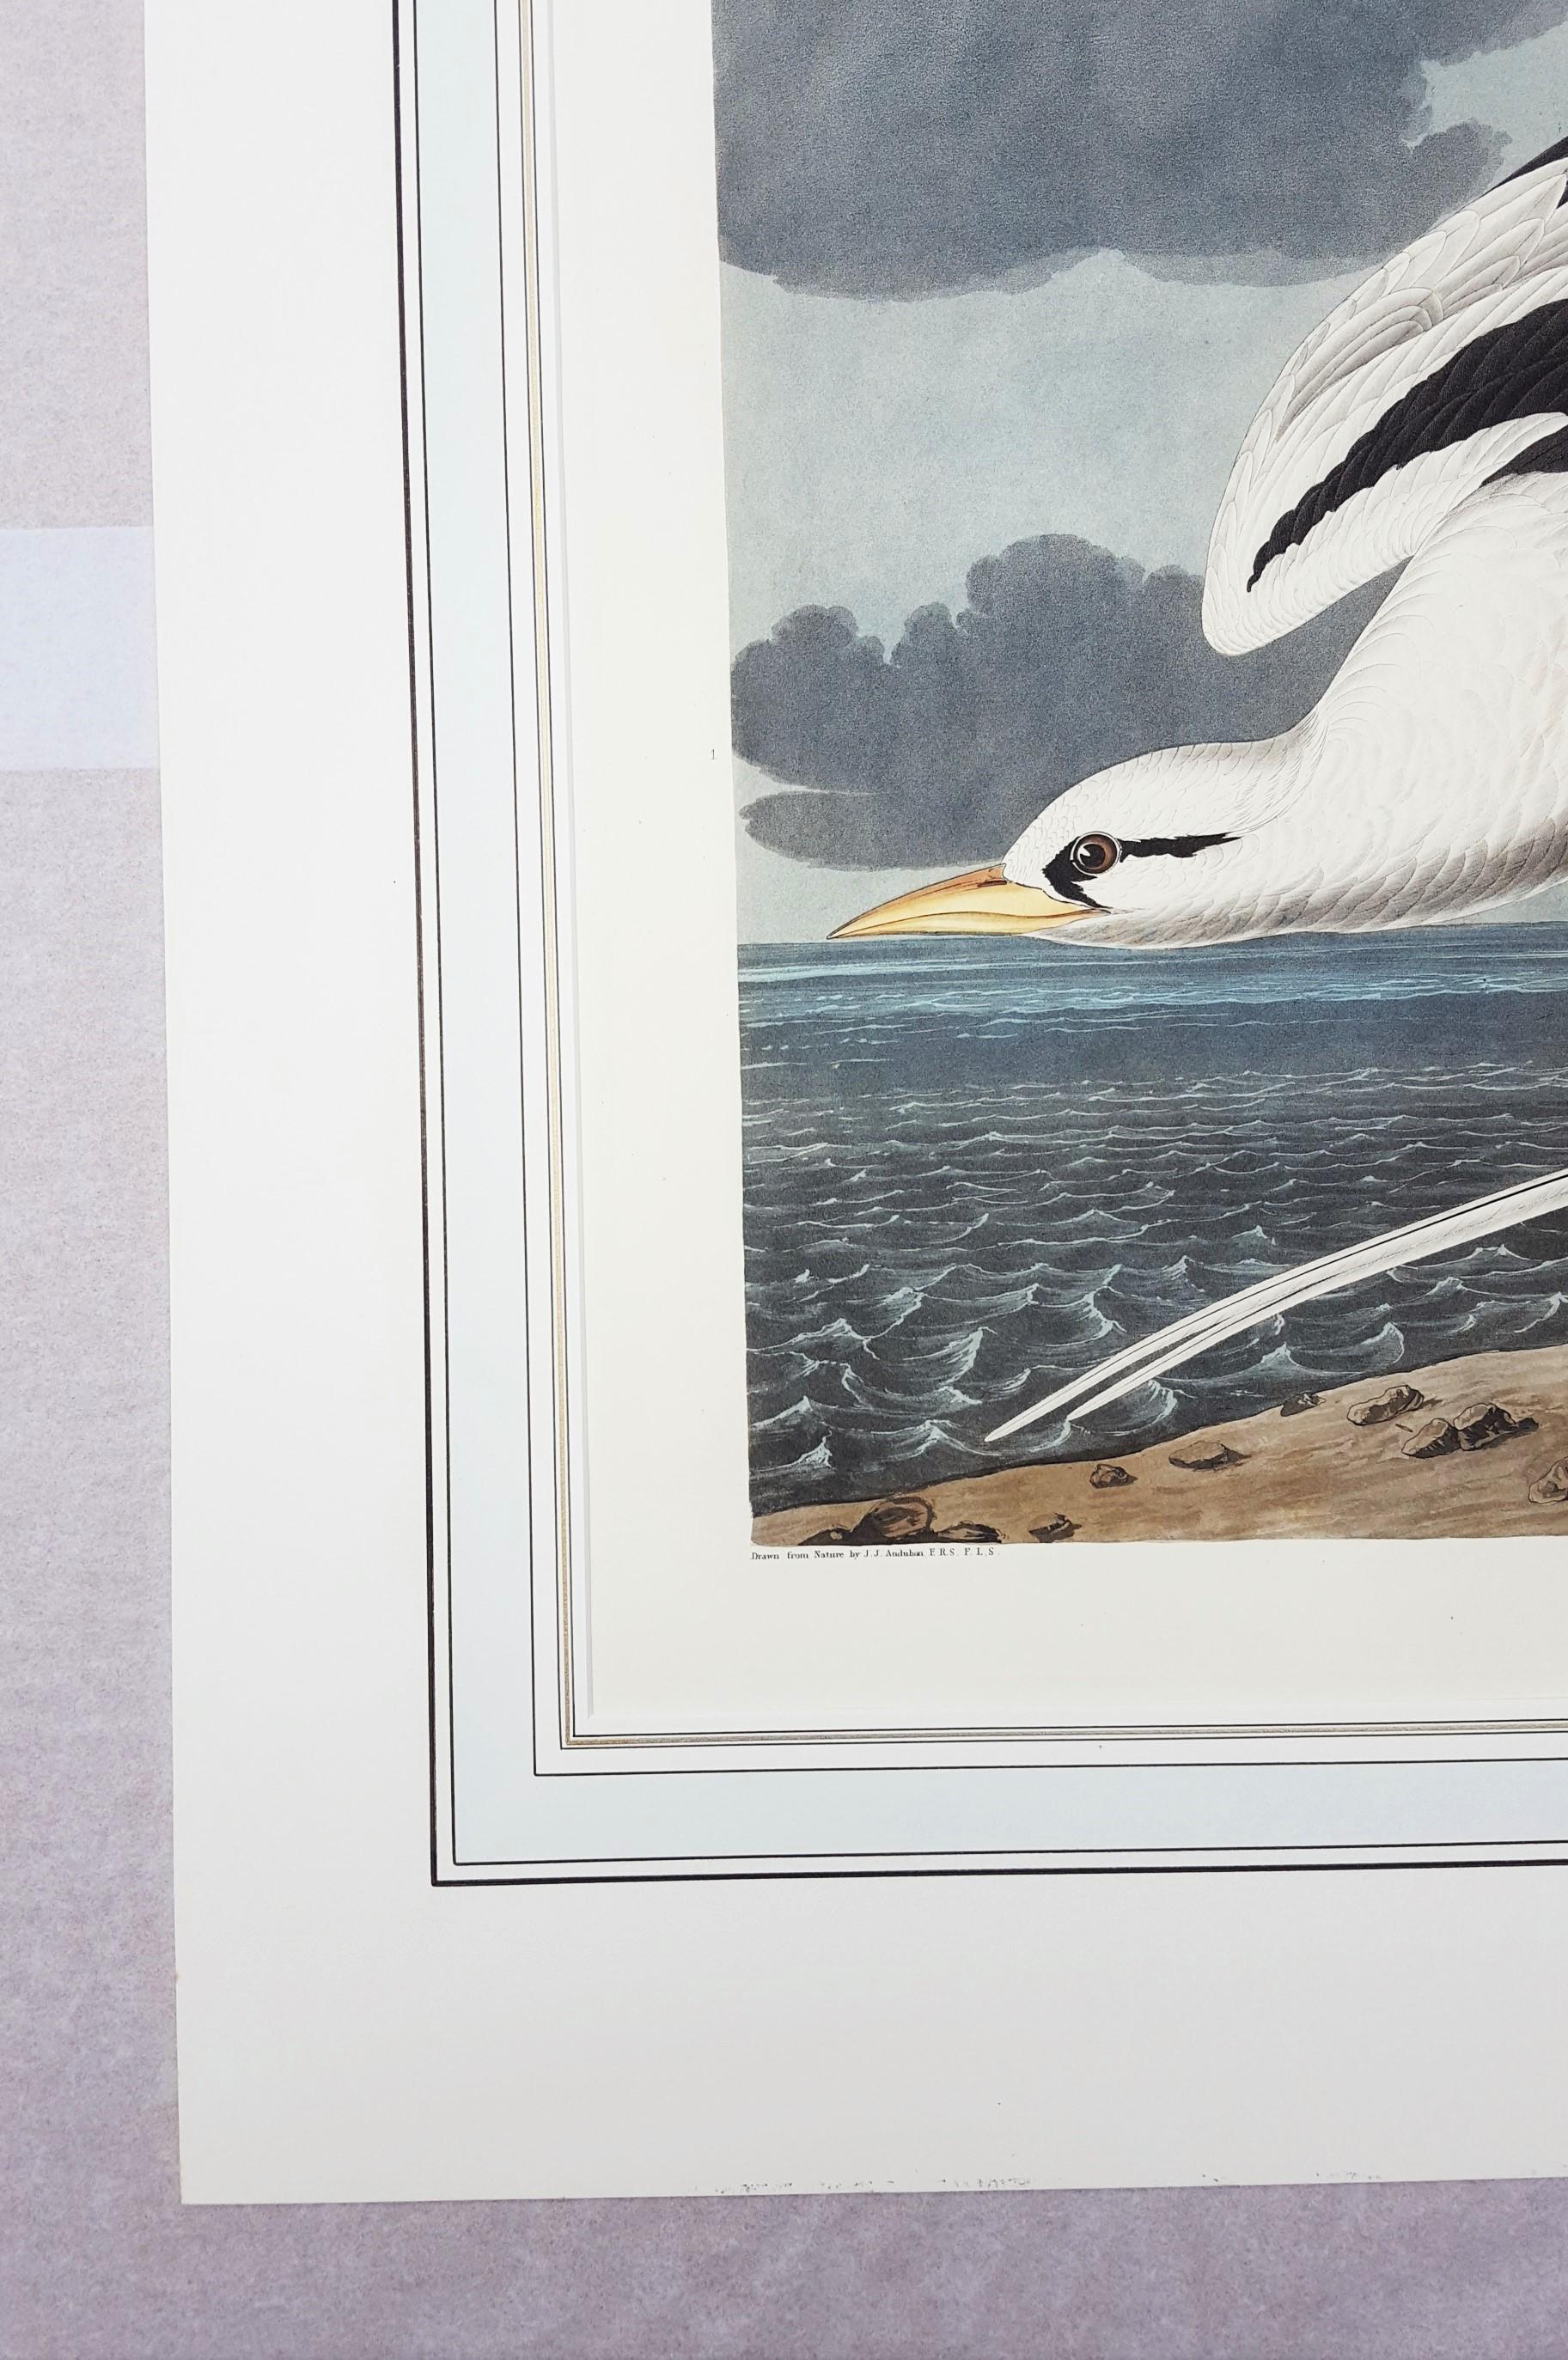 Artist: John James Audubon (American, 1785-1851)
Title: 